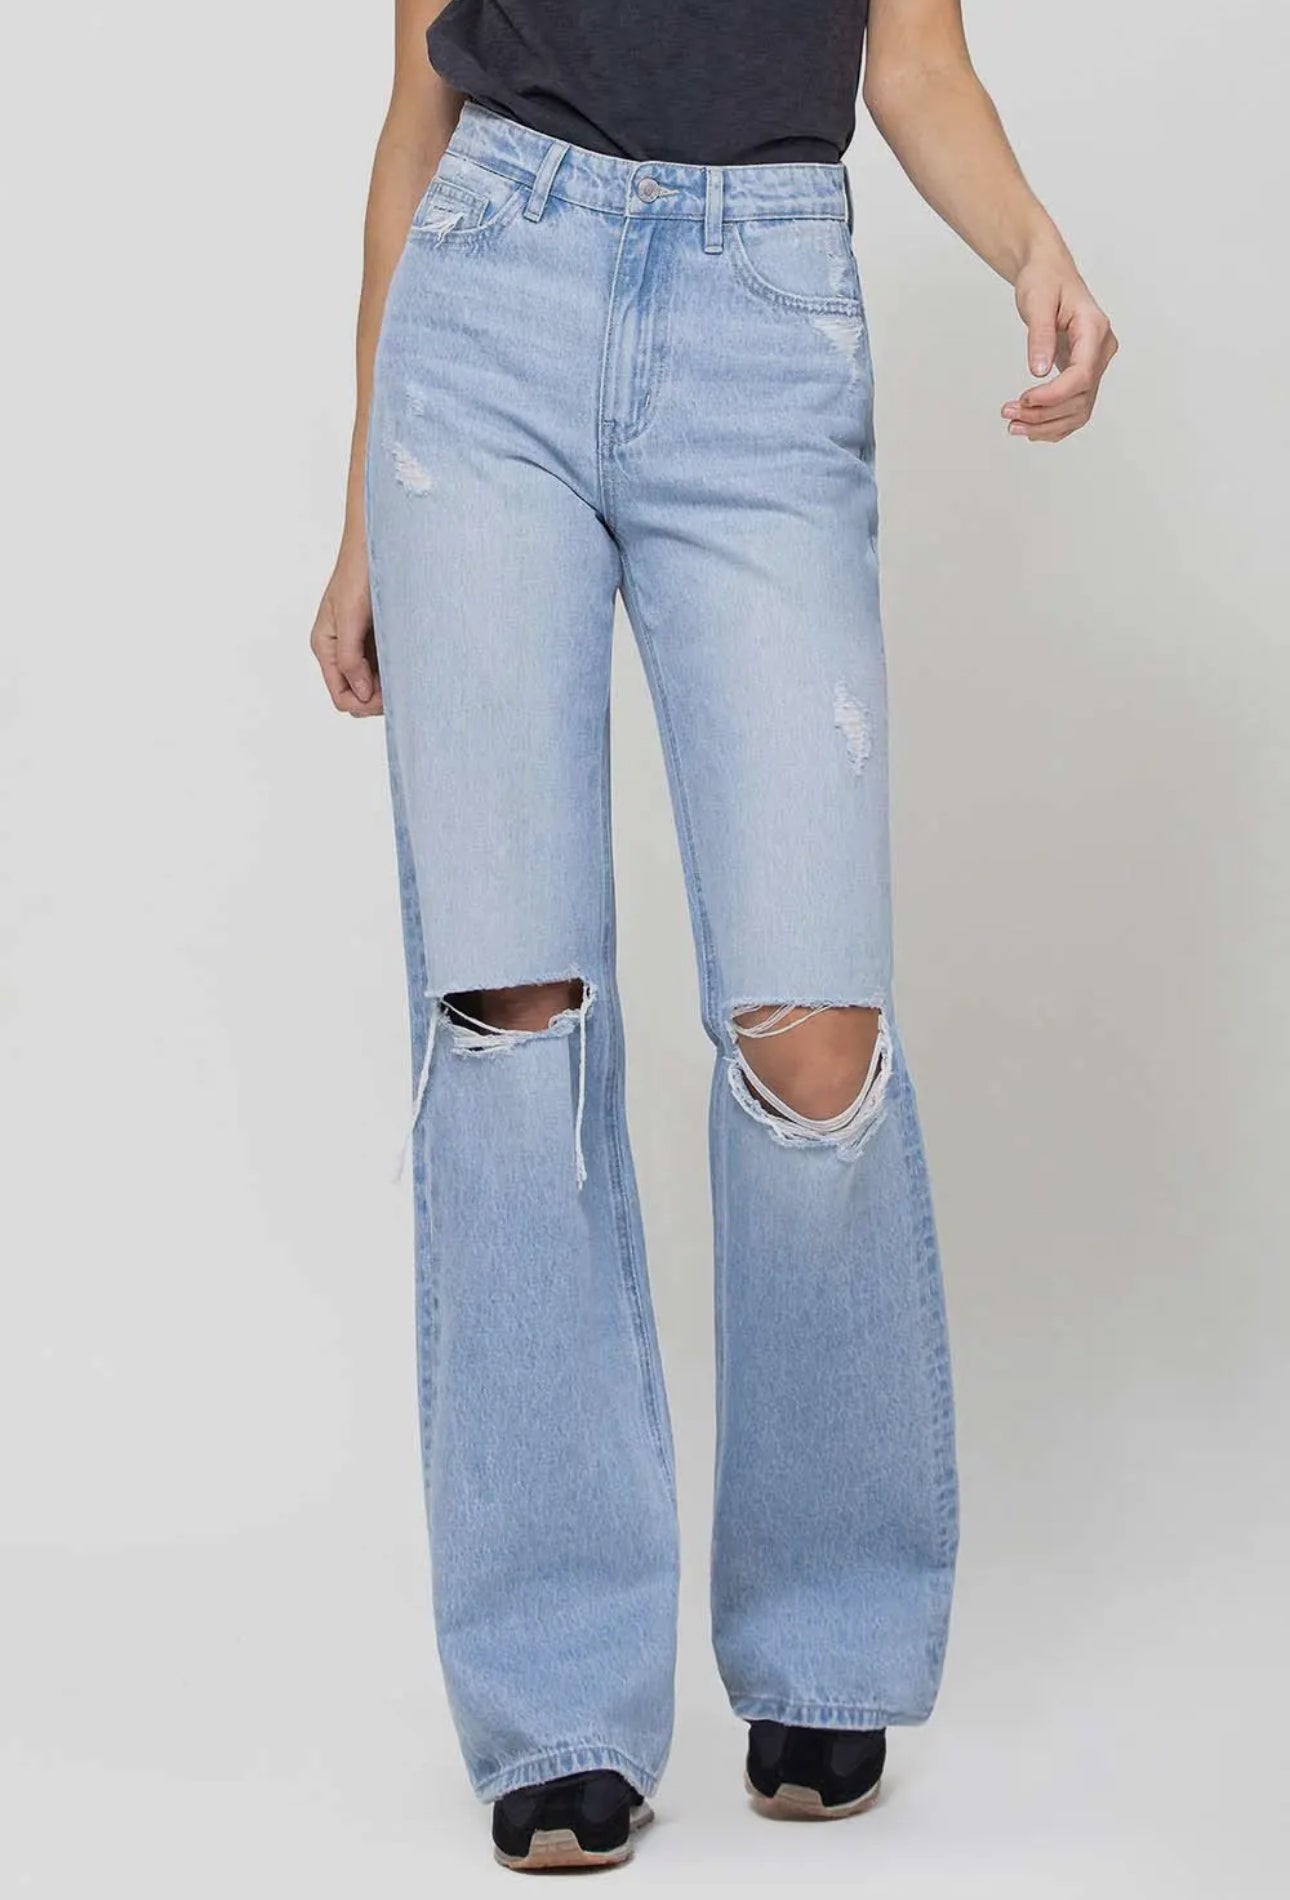 90’s High Rise Vintage Jeans